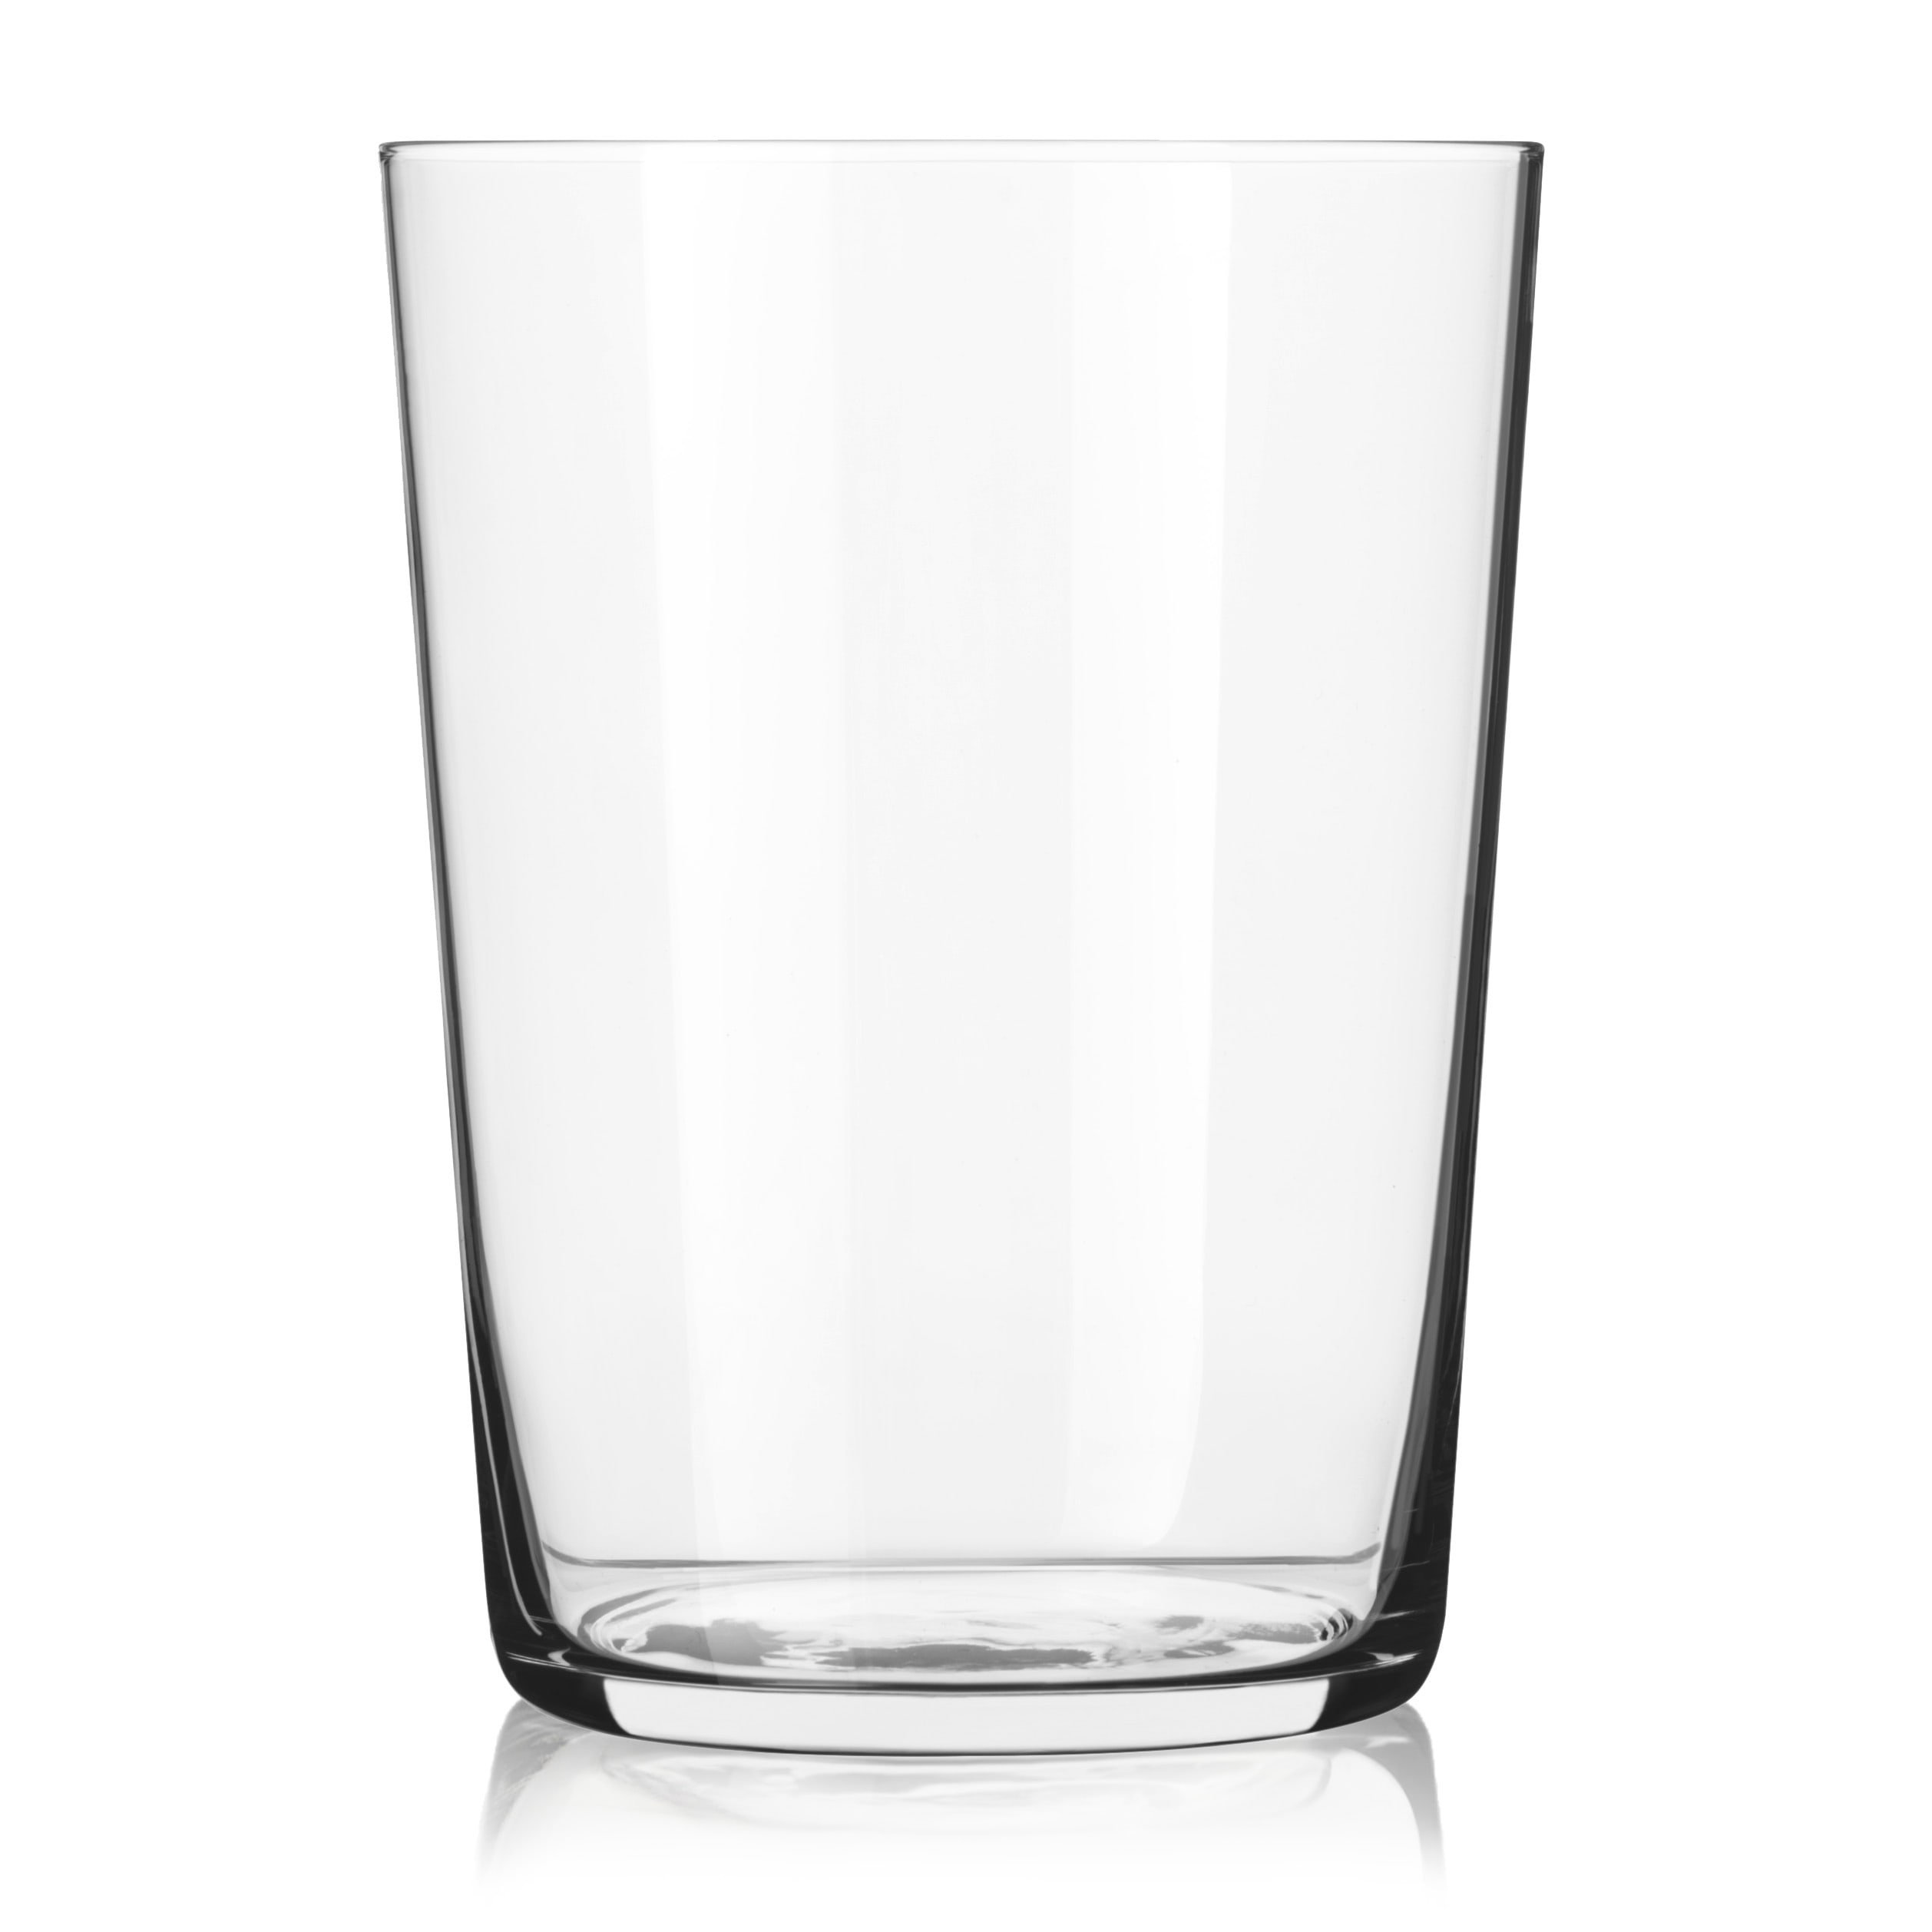 Libby-Glass-Double-Shot-Glasses-juice-Glasses-Sugar-Creamer-3-Piece-Set